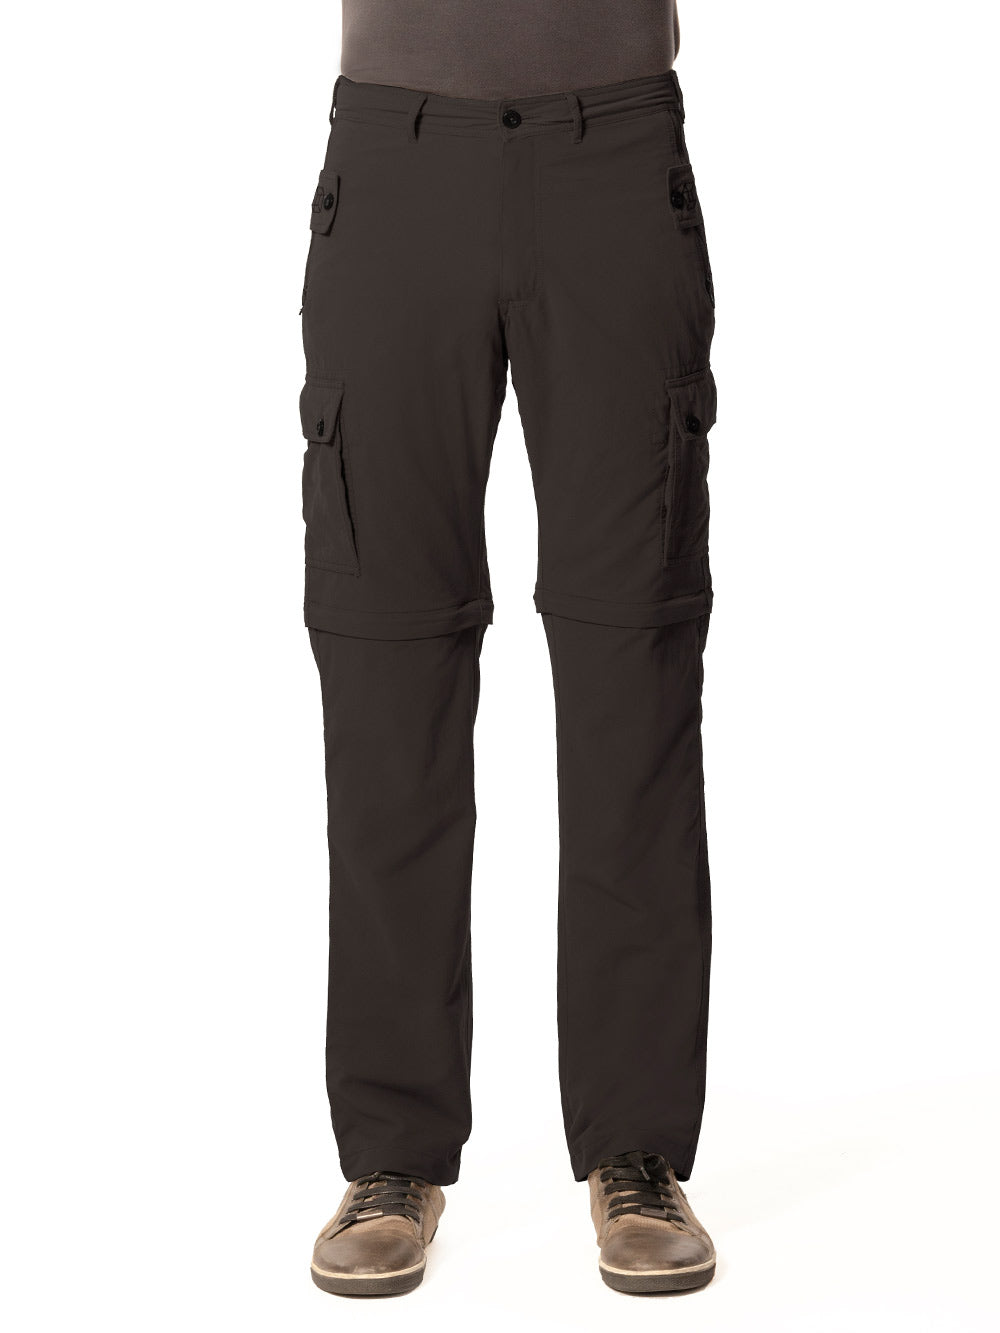 Pick-Pocket Proof Convertible Travel Pants Grey / 30x30